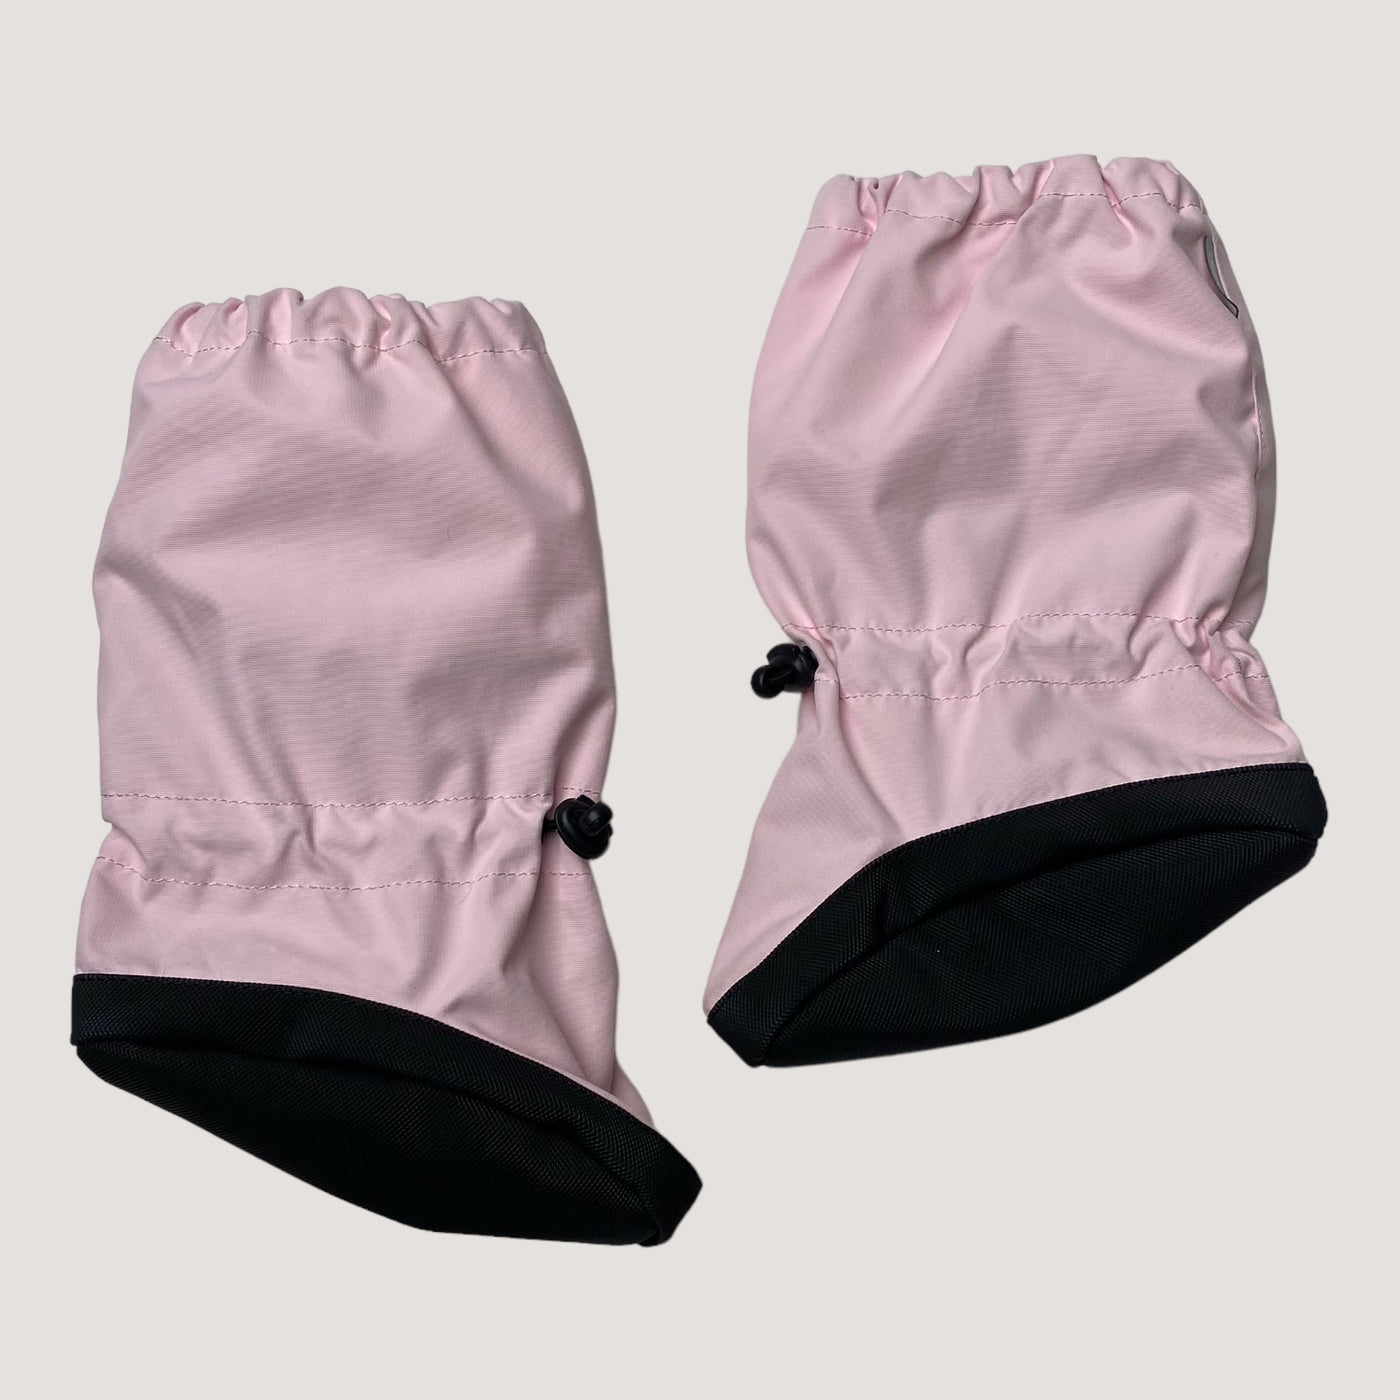 Reima baby winter boots, pink | 1-2 years